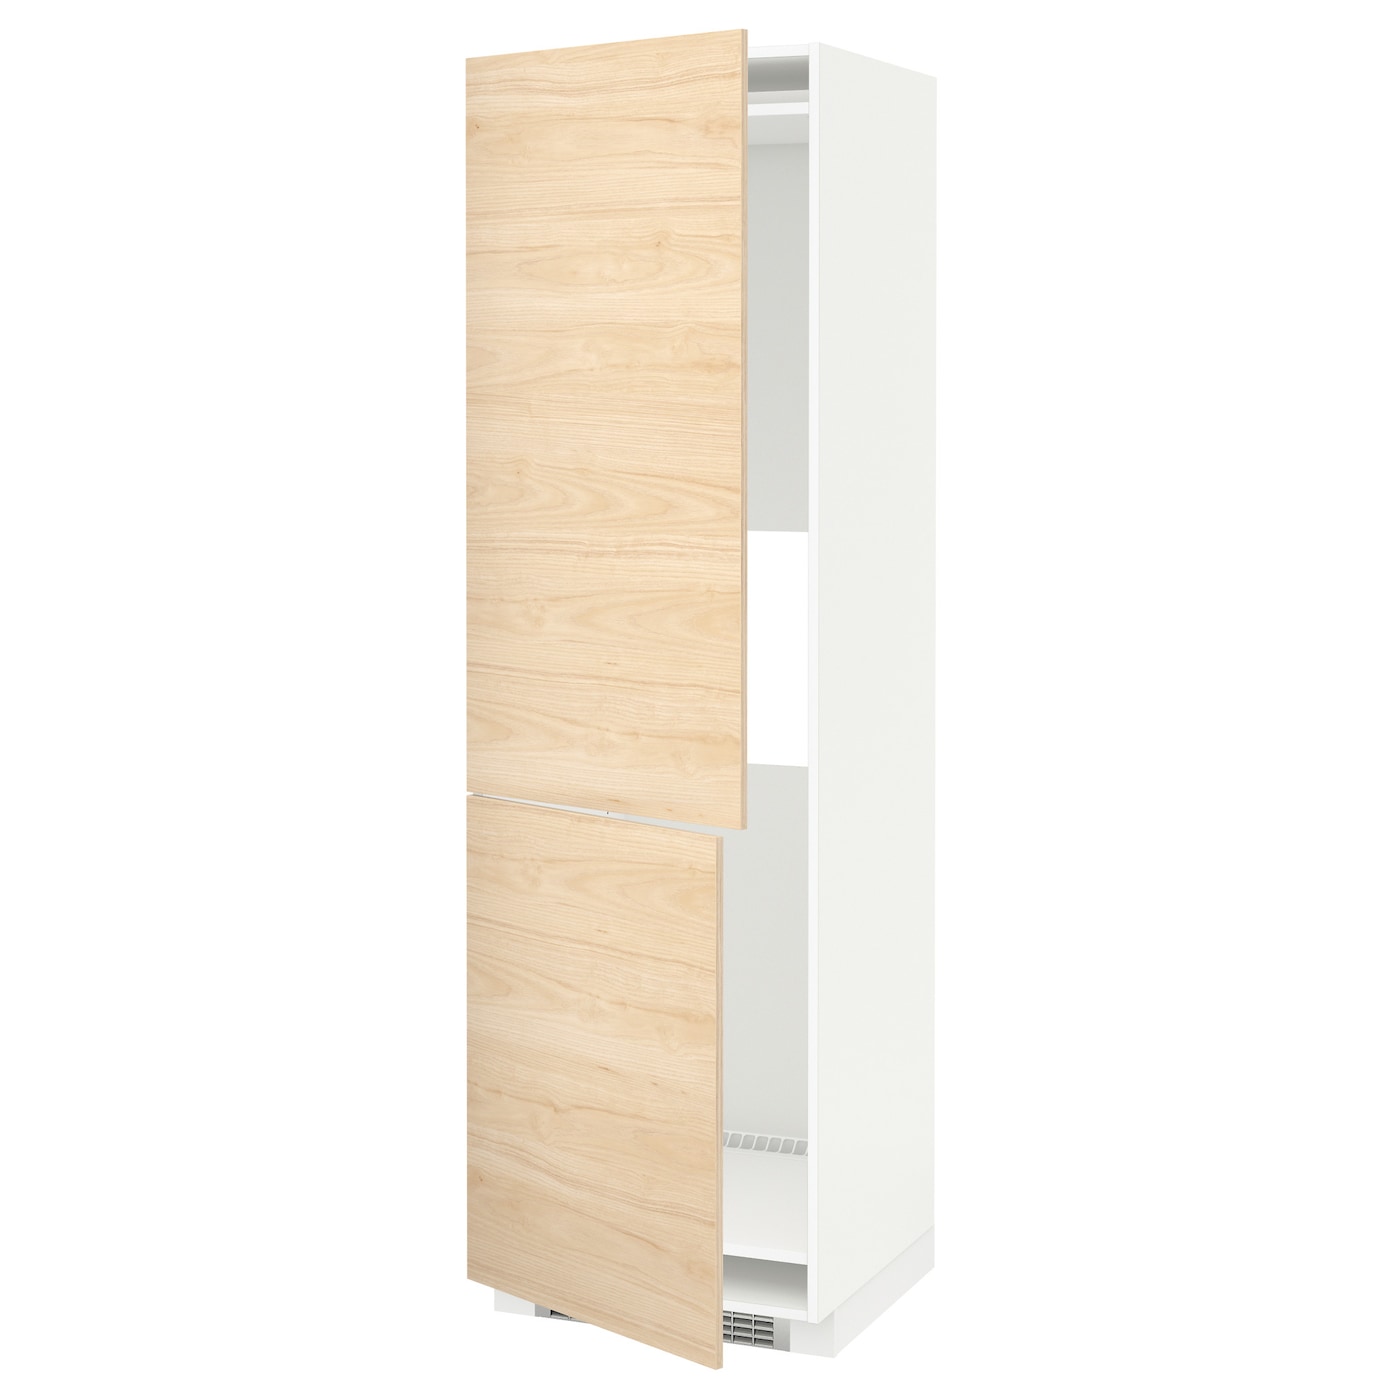 Высокий кухонный шкаф - IKEA METOD/МЕТОД ИКЕА, 200х60х60 см, белый/под беленый дуб